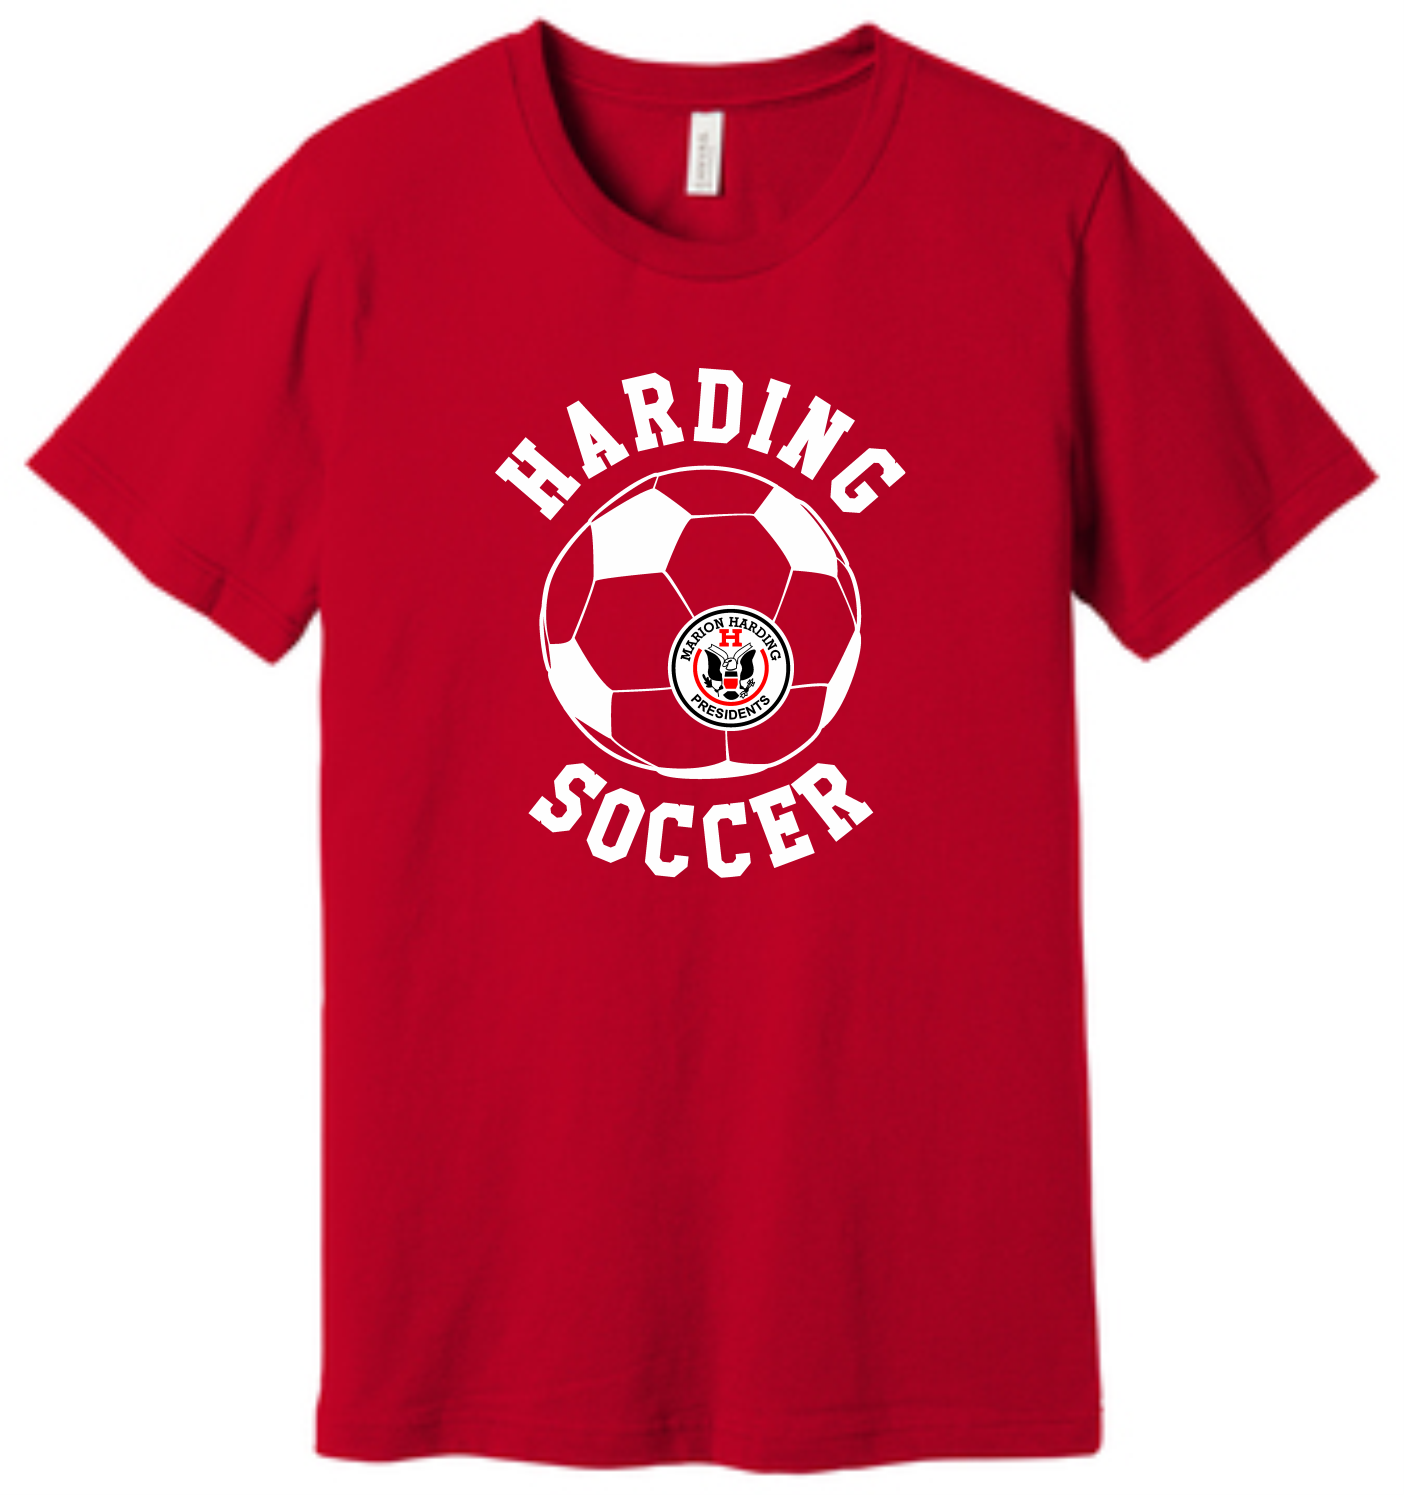 Harding Soccer w/Seal Bella Canvas T-Shirt